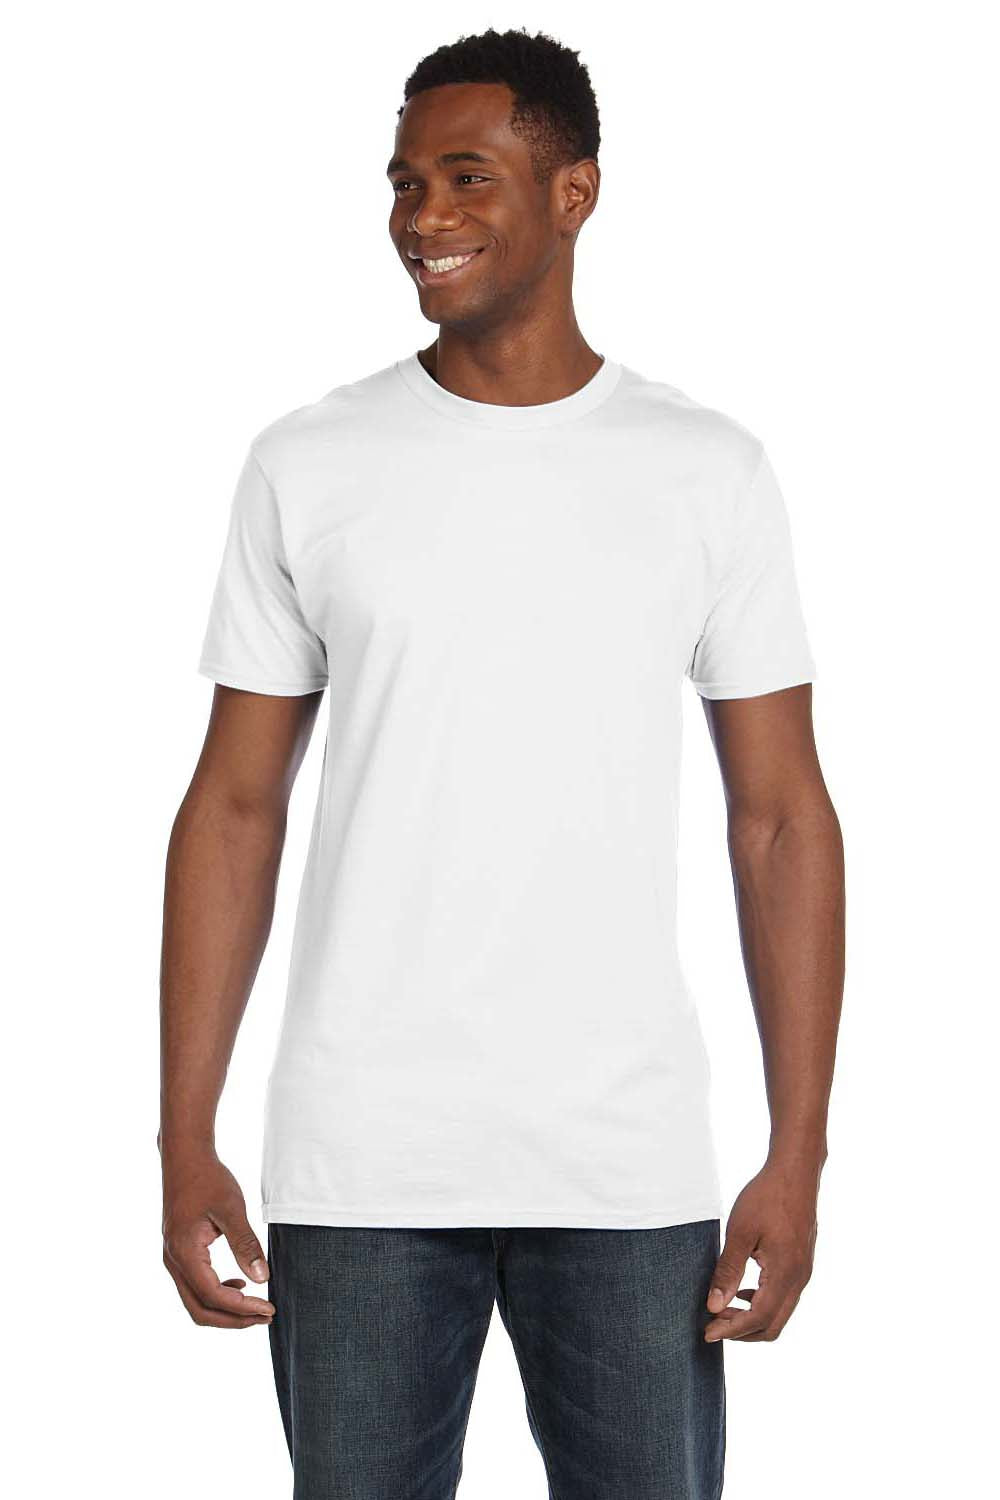 Hanes 4980 Mens Nano-T Short Sleeve Crewneck T-Shirt White Front